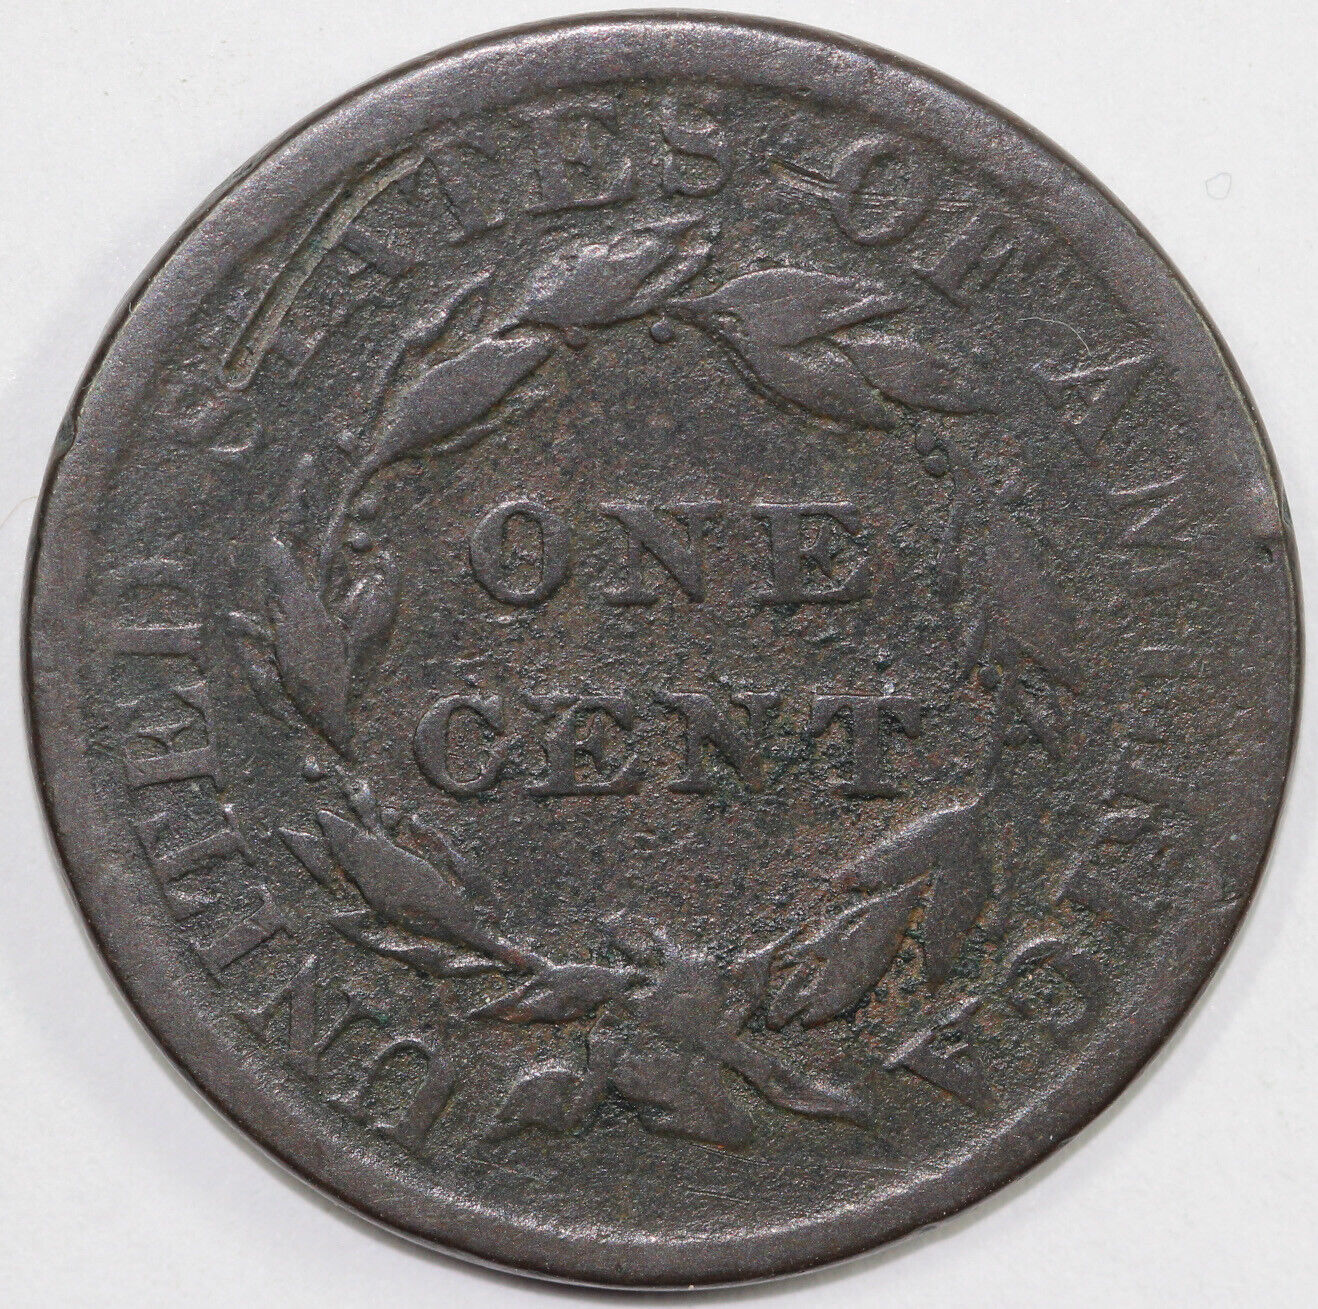 1820 1c N-14 Coronet or Matron Head Large Cent